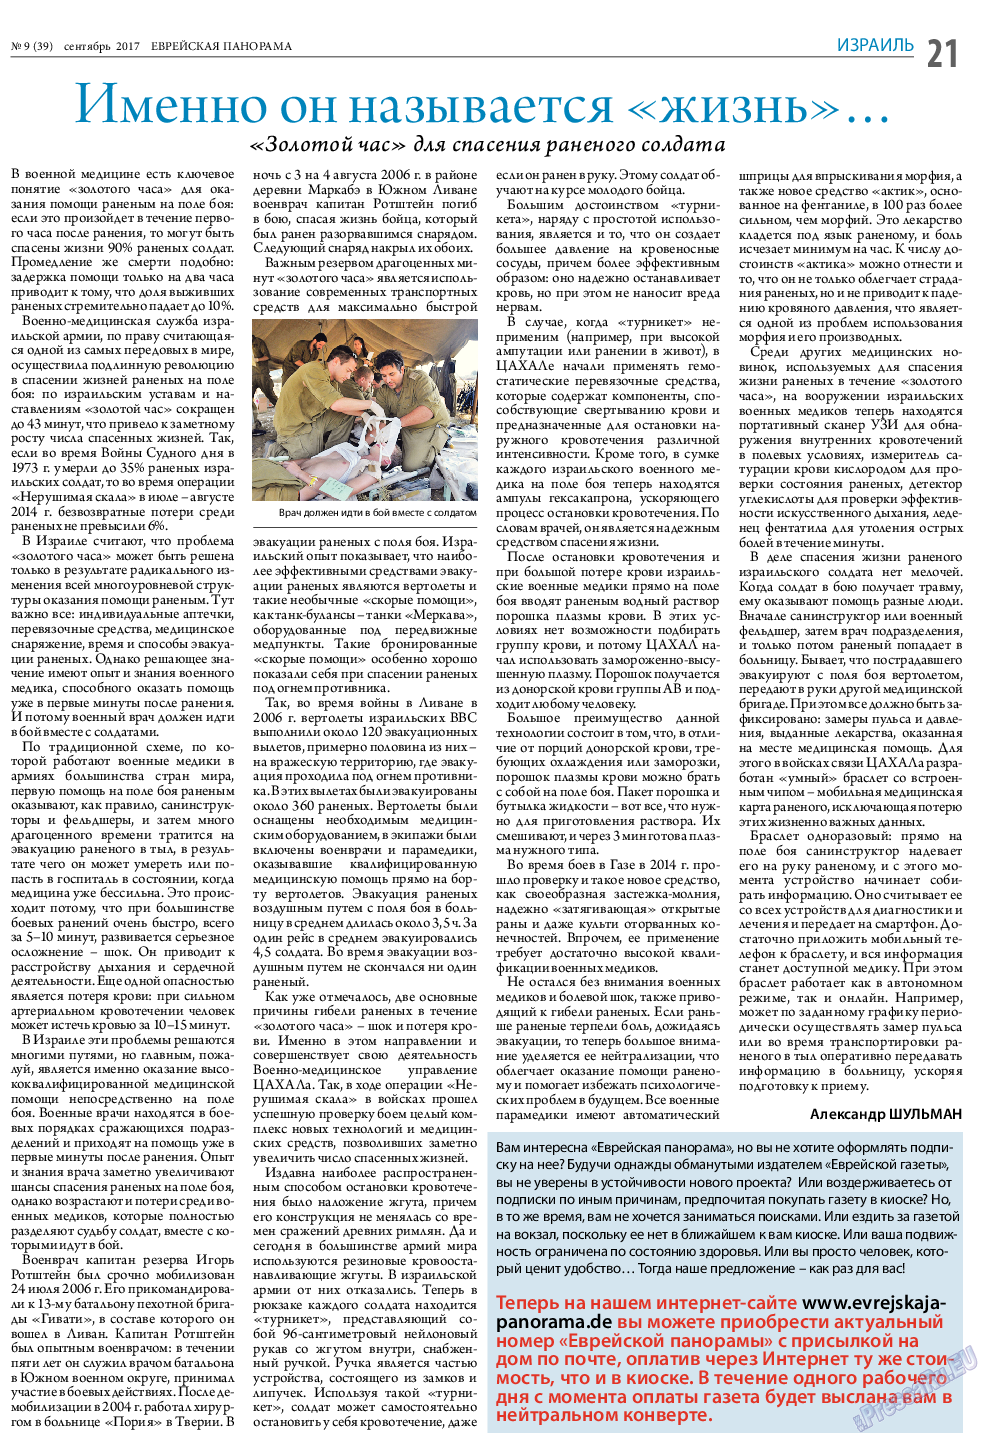 Еврейская панорама, газета. 2017 №9 стр.21